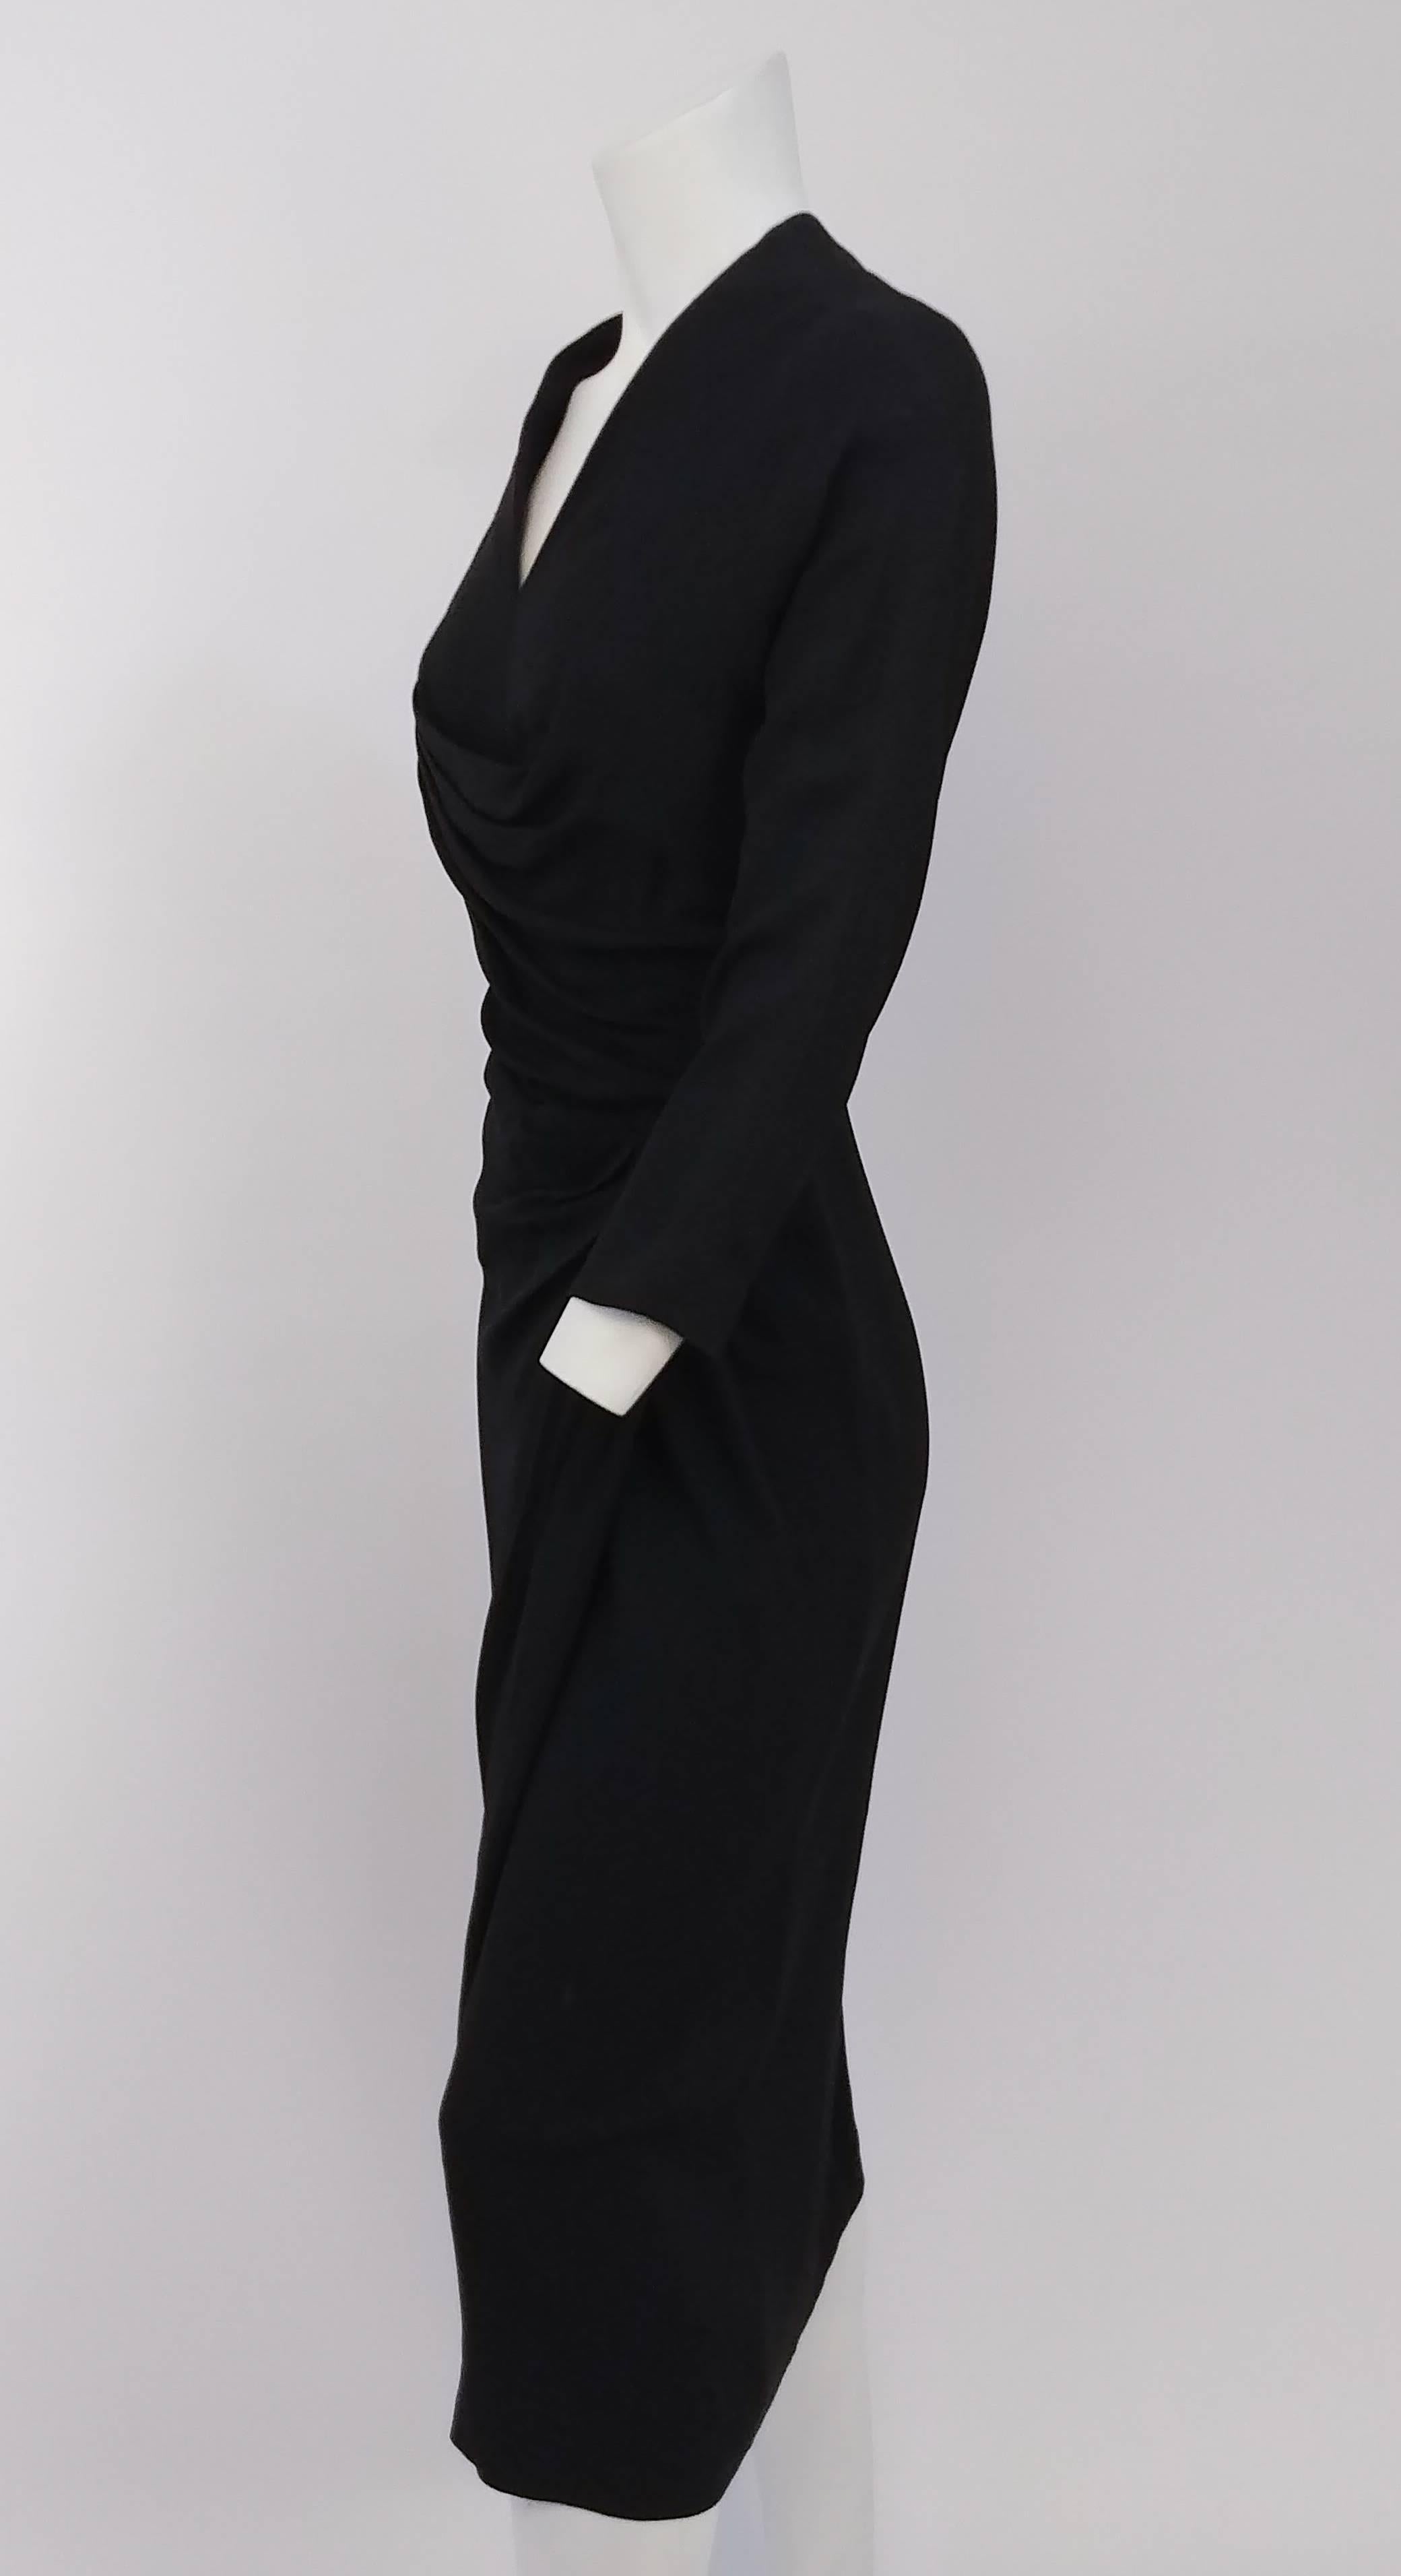 1950s Dorothy O'hara Gathered Black Dress. V-neck dress with asymmetrical draping. Zips up back.